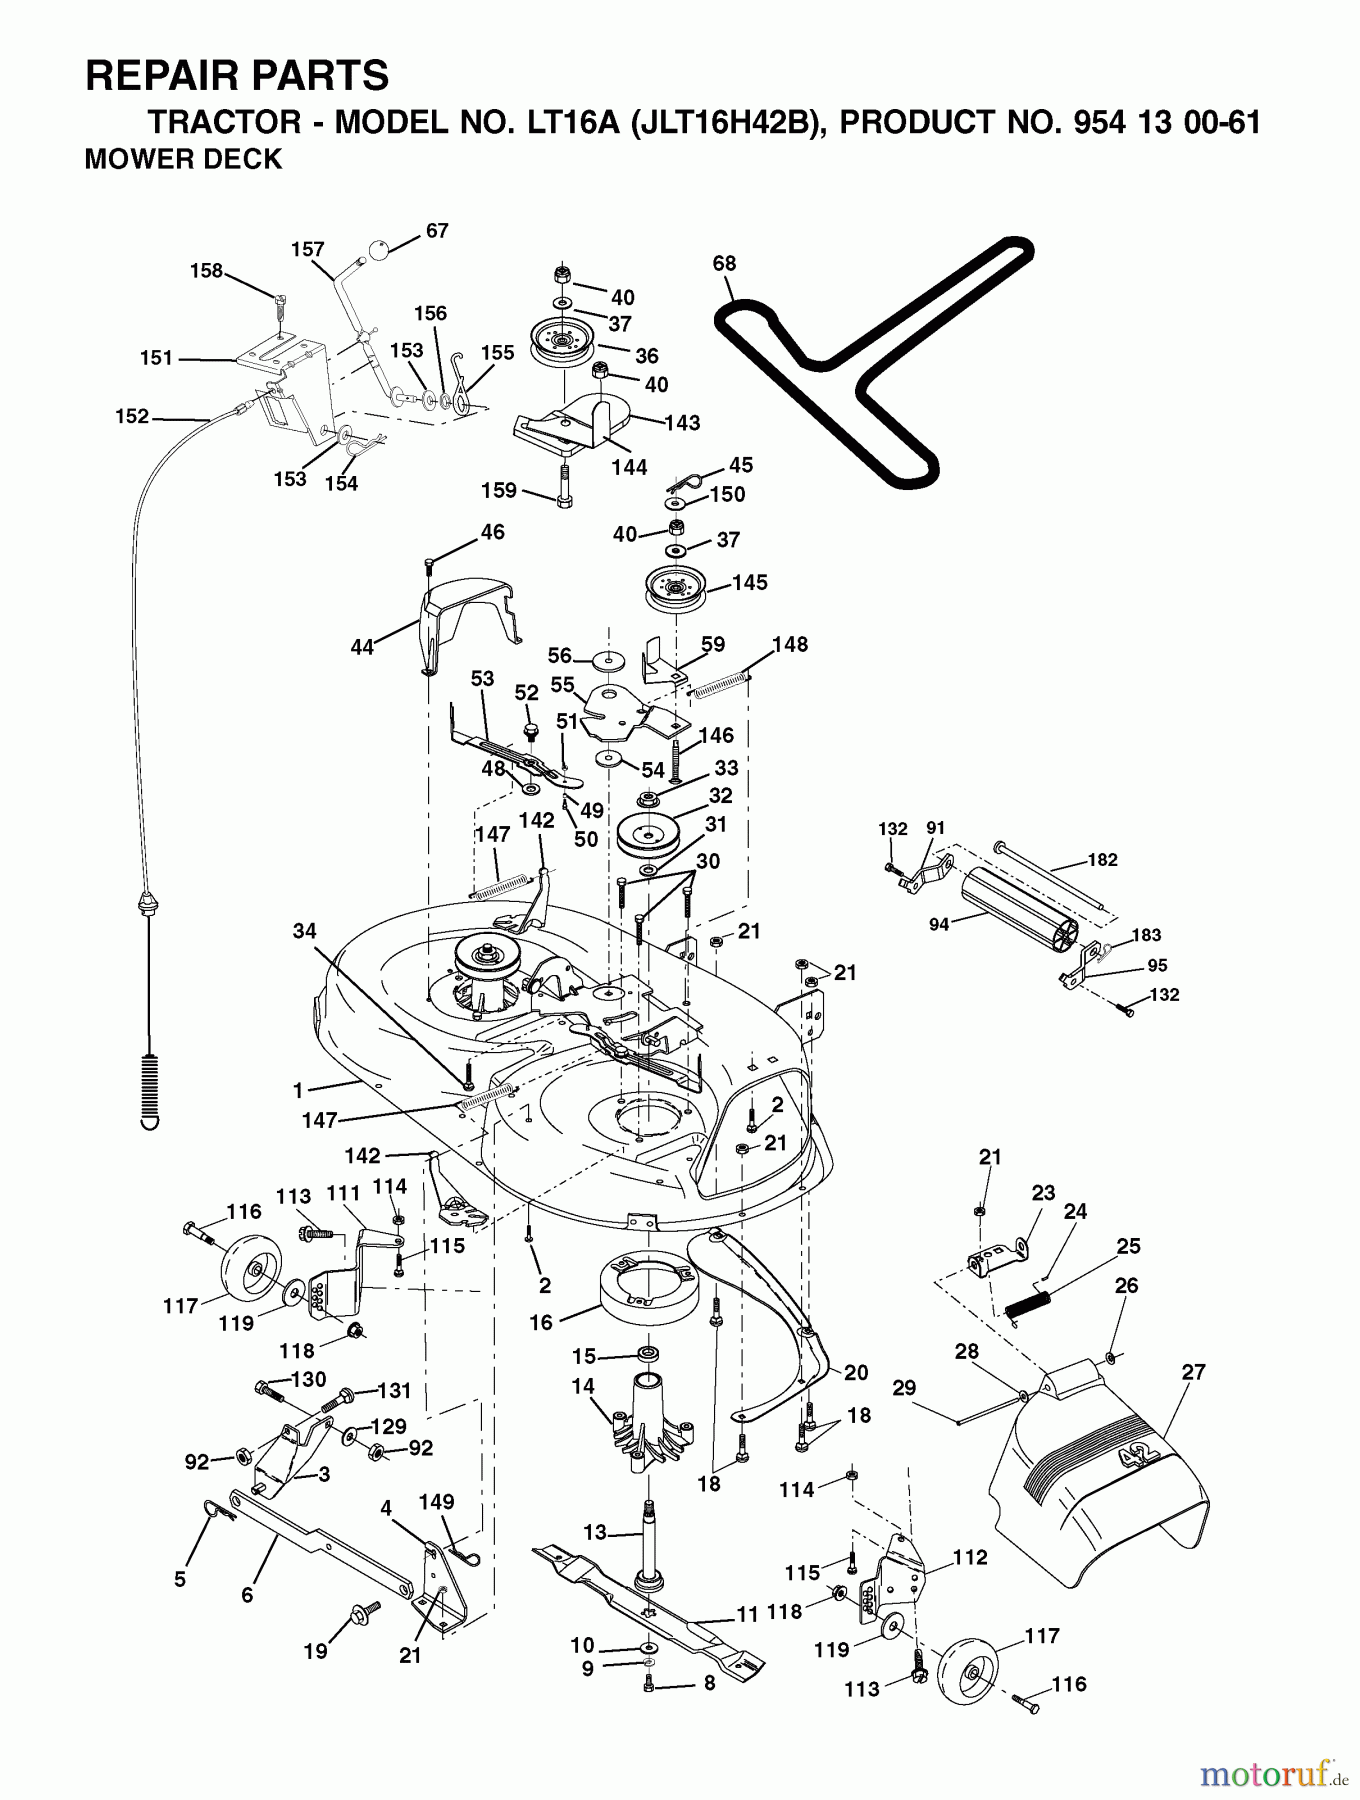  Jonsered Rasen  und Garten Traktoren LT16A (JLT16H42B, 954130061) - Jonsered Lawn & Garden Tractor (2002-03) MOWER DECK / CUTTING DECK